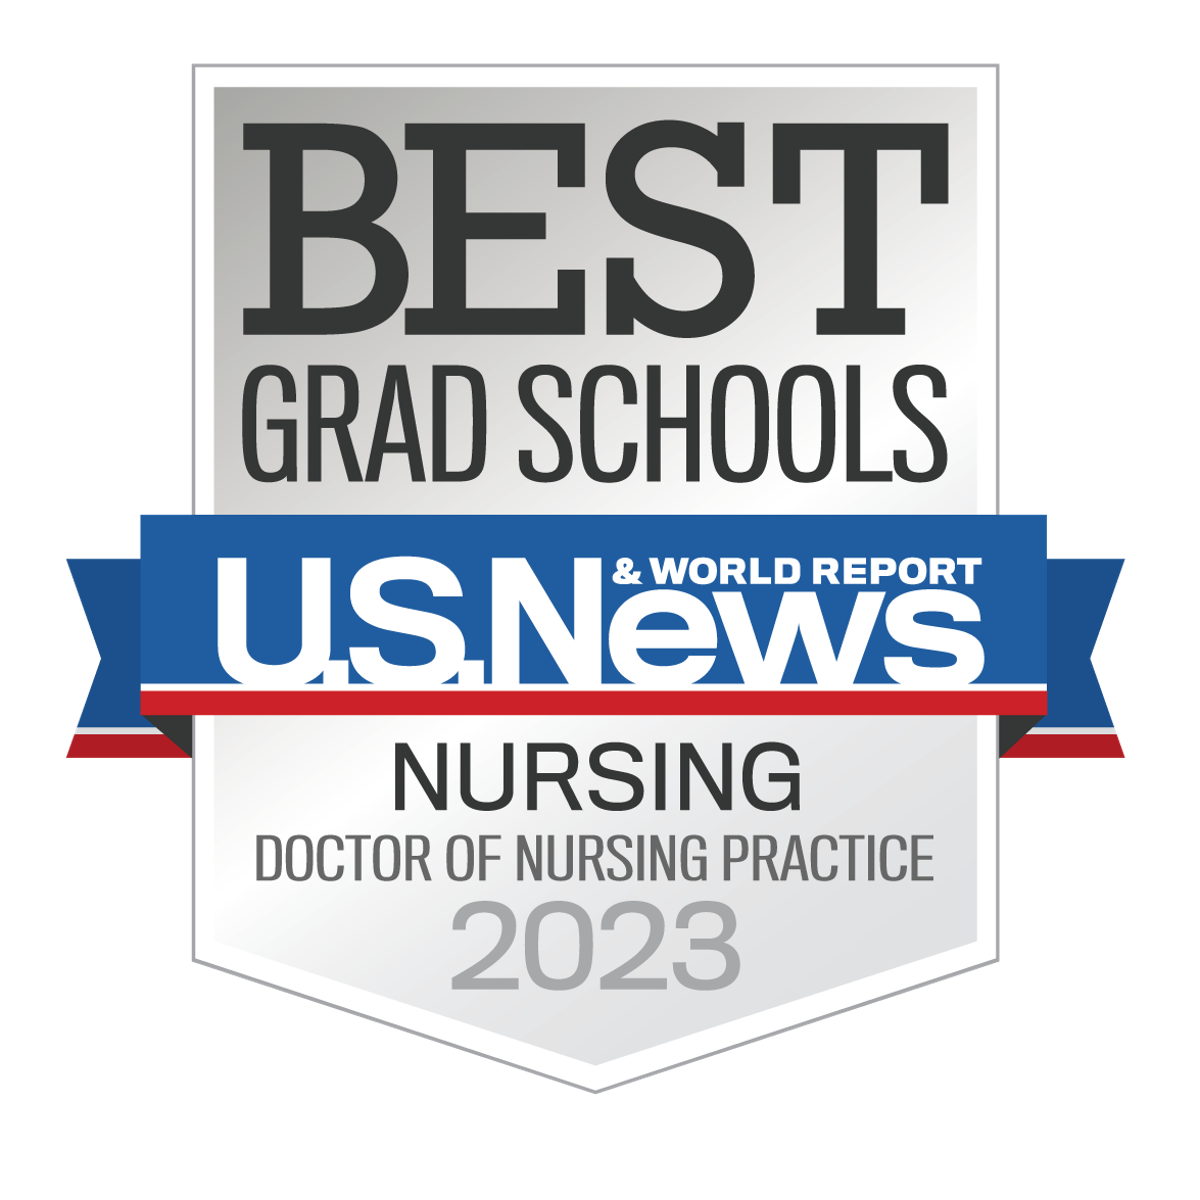 Best Colleges U.S. News and World Report Nursing BSN Programs 2022-2023